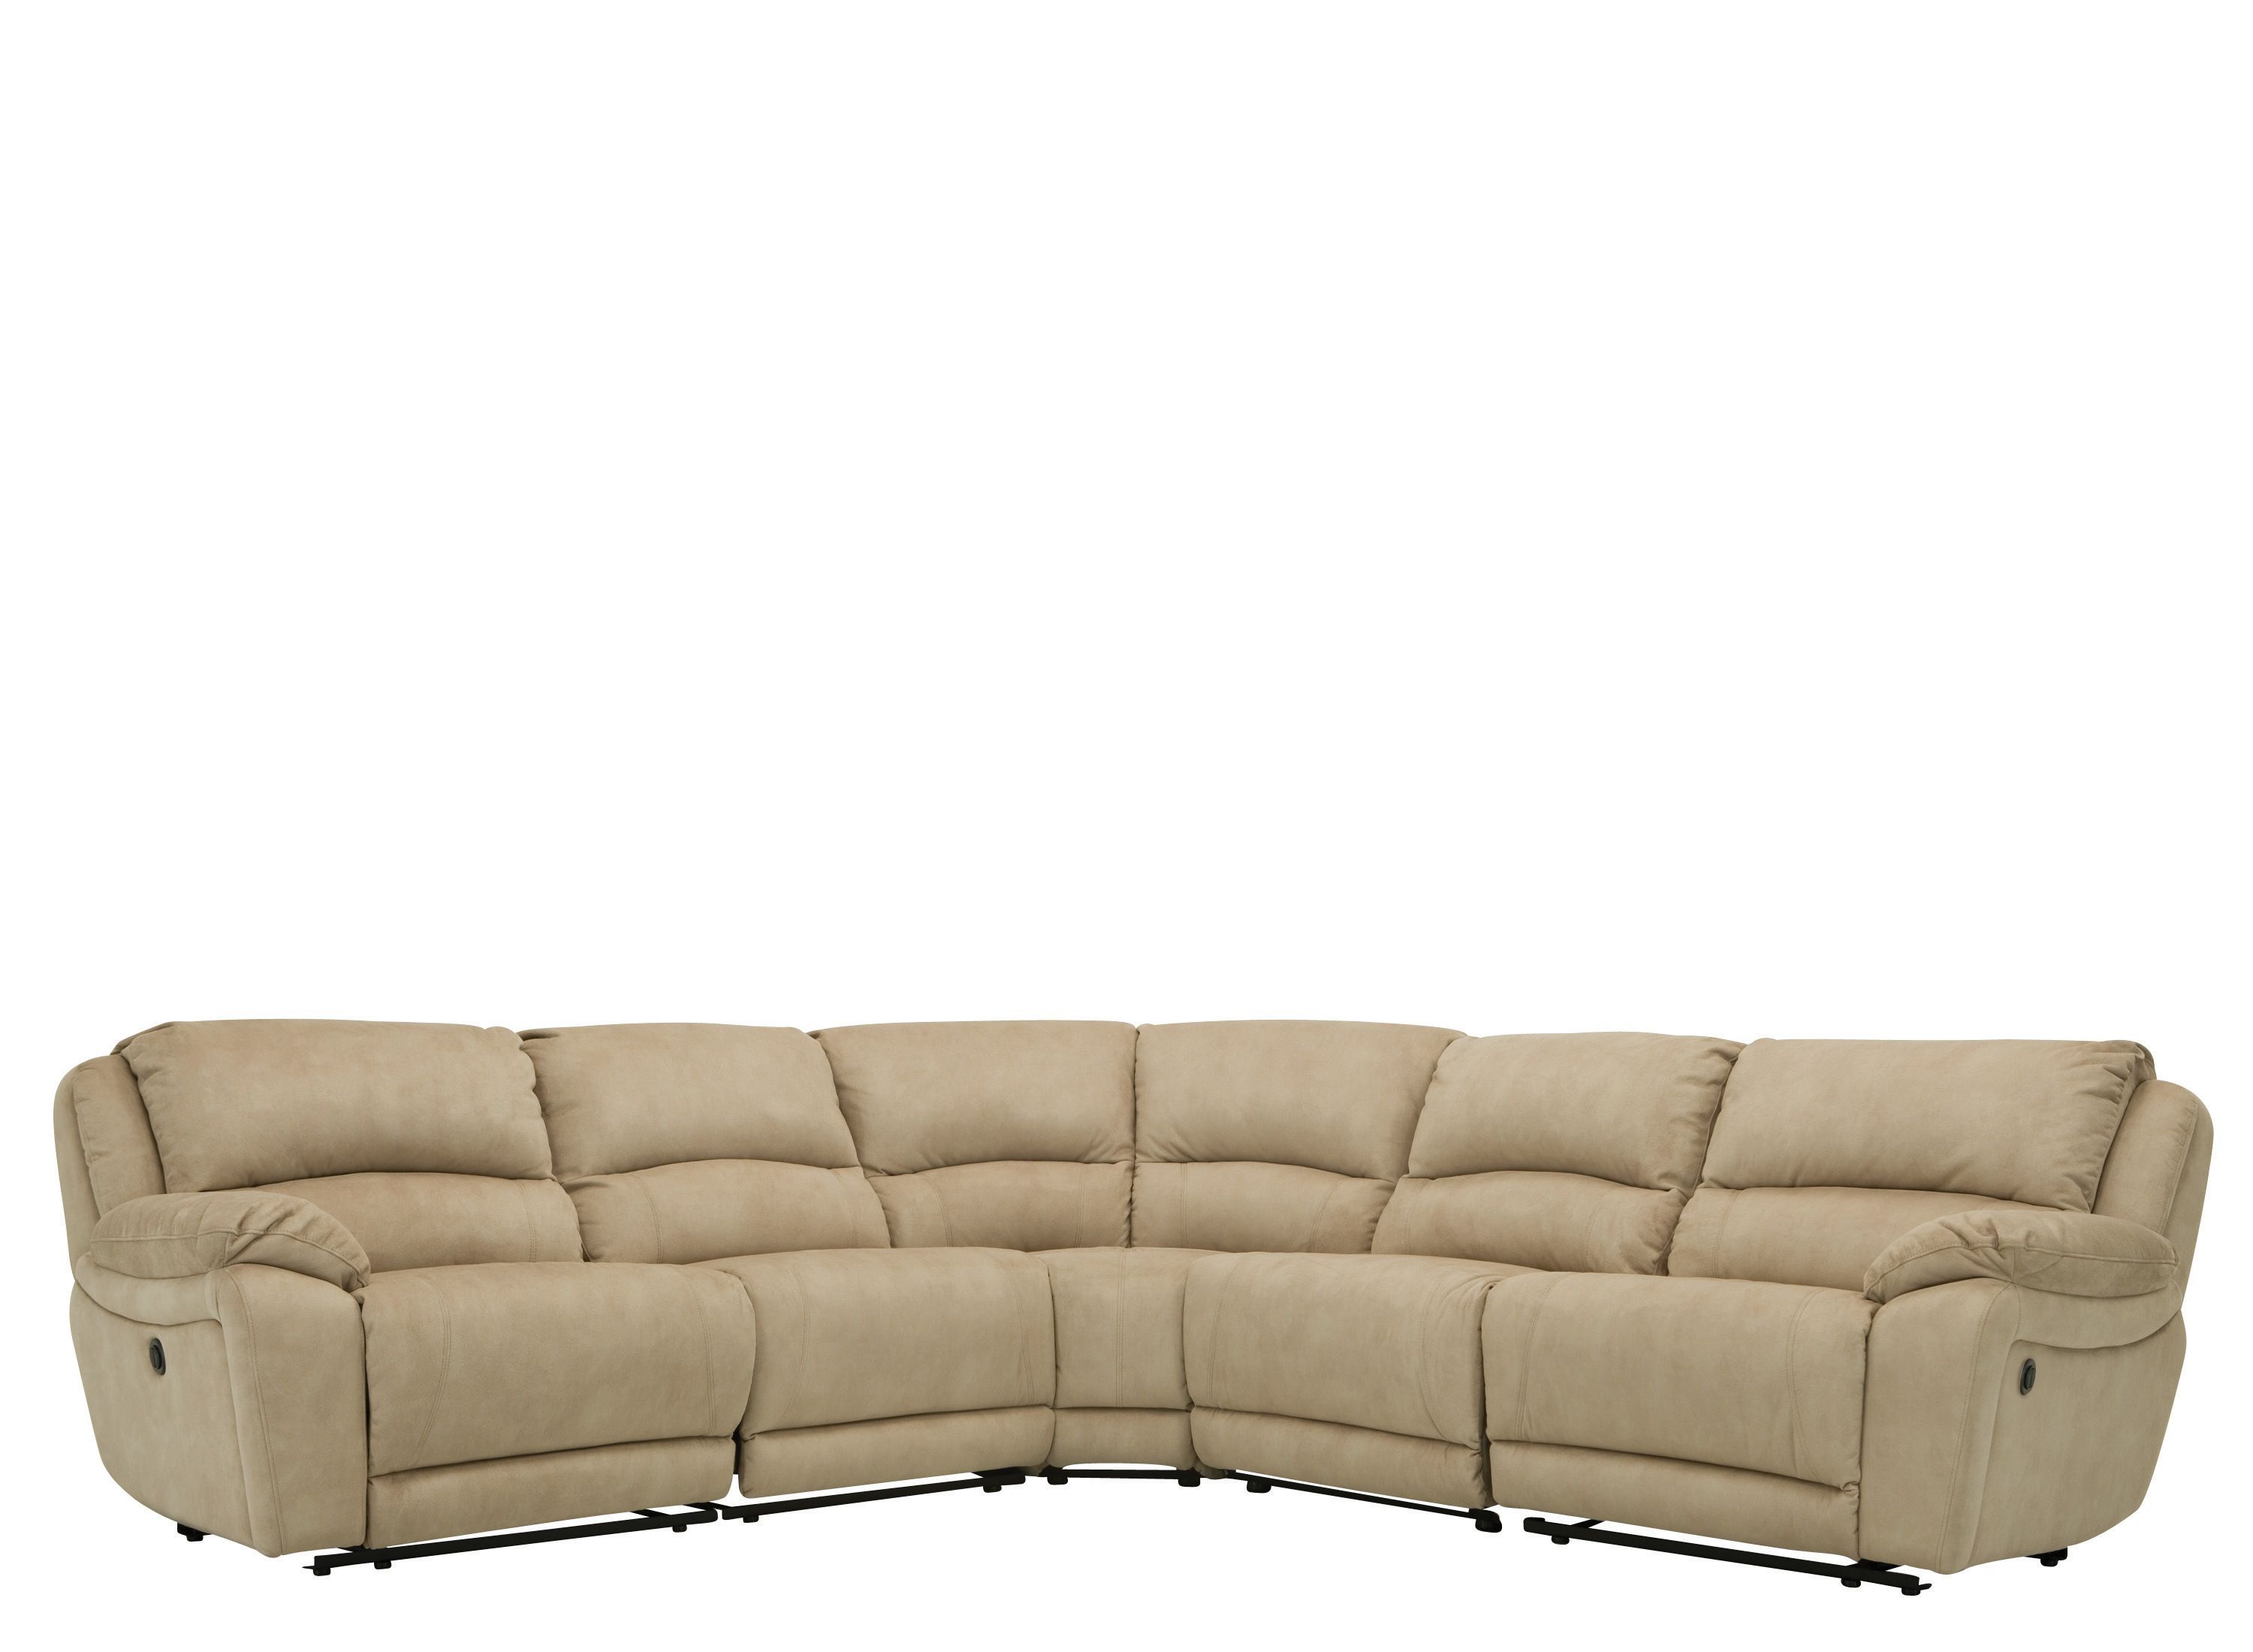 Cindy Crawford Mackenzie 5 Pc, Cindy Crawford Leather Couch